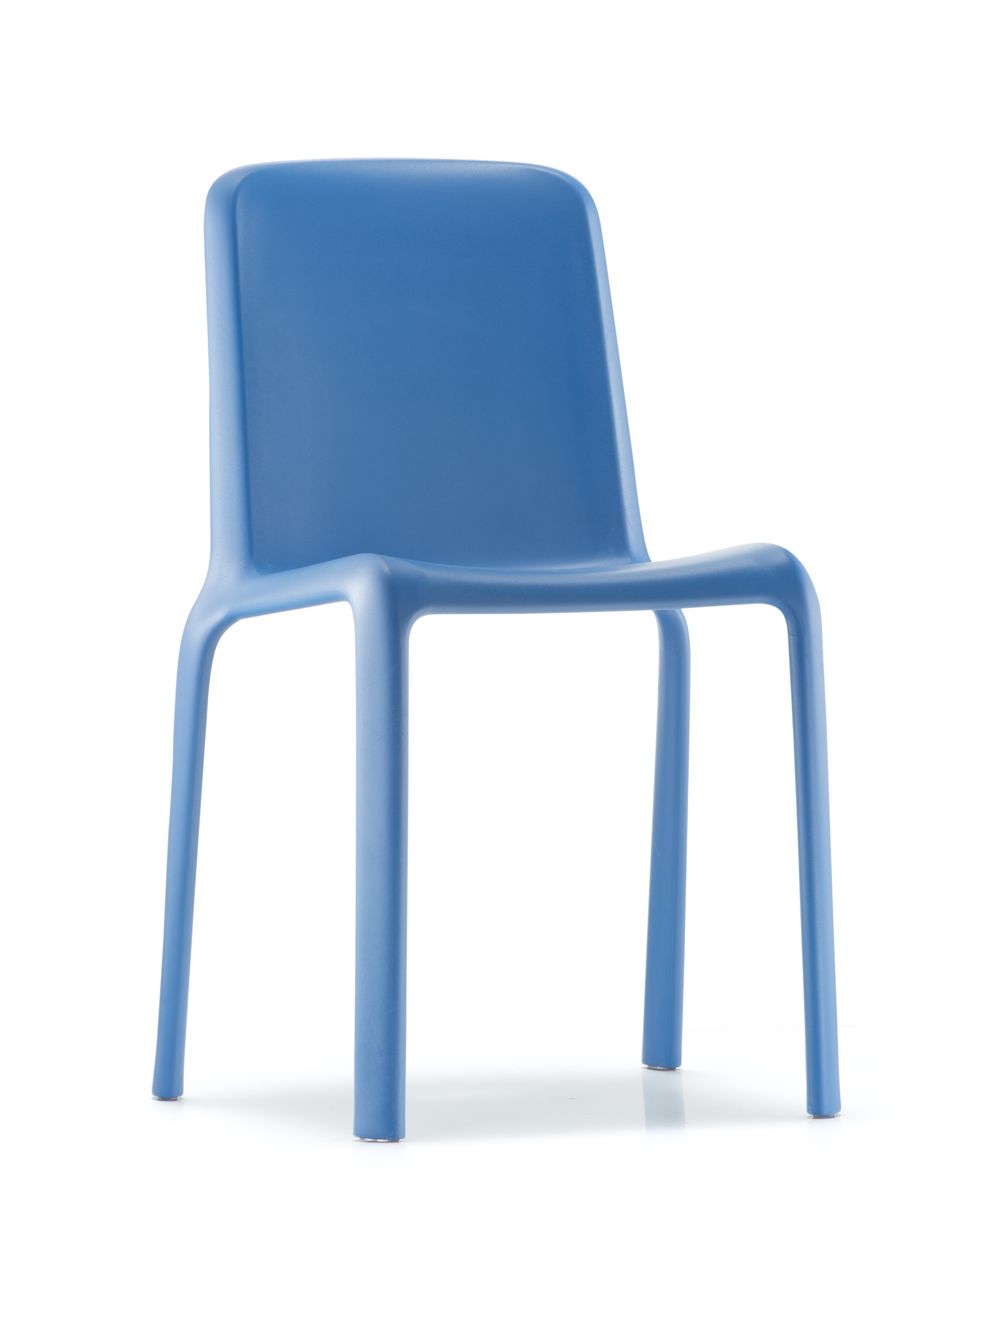 Snow Chair Online Shop | Sedie.Design®